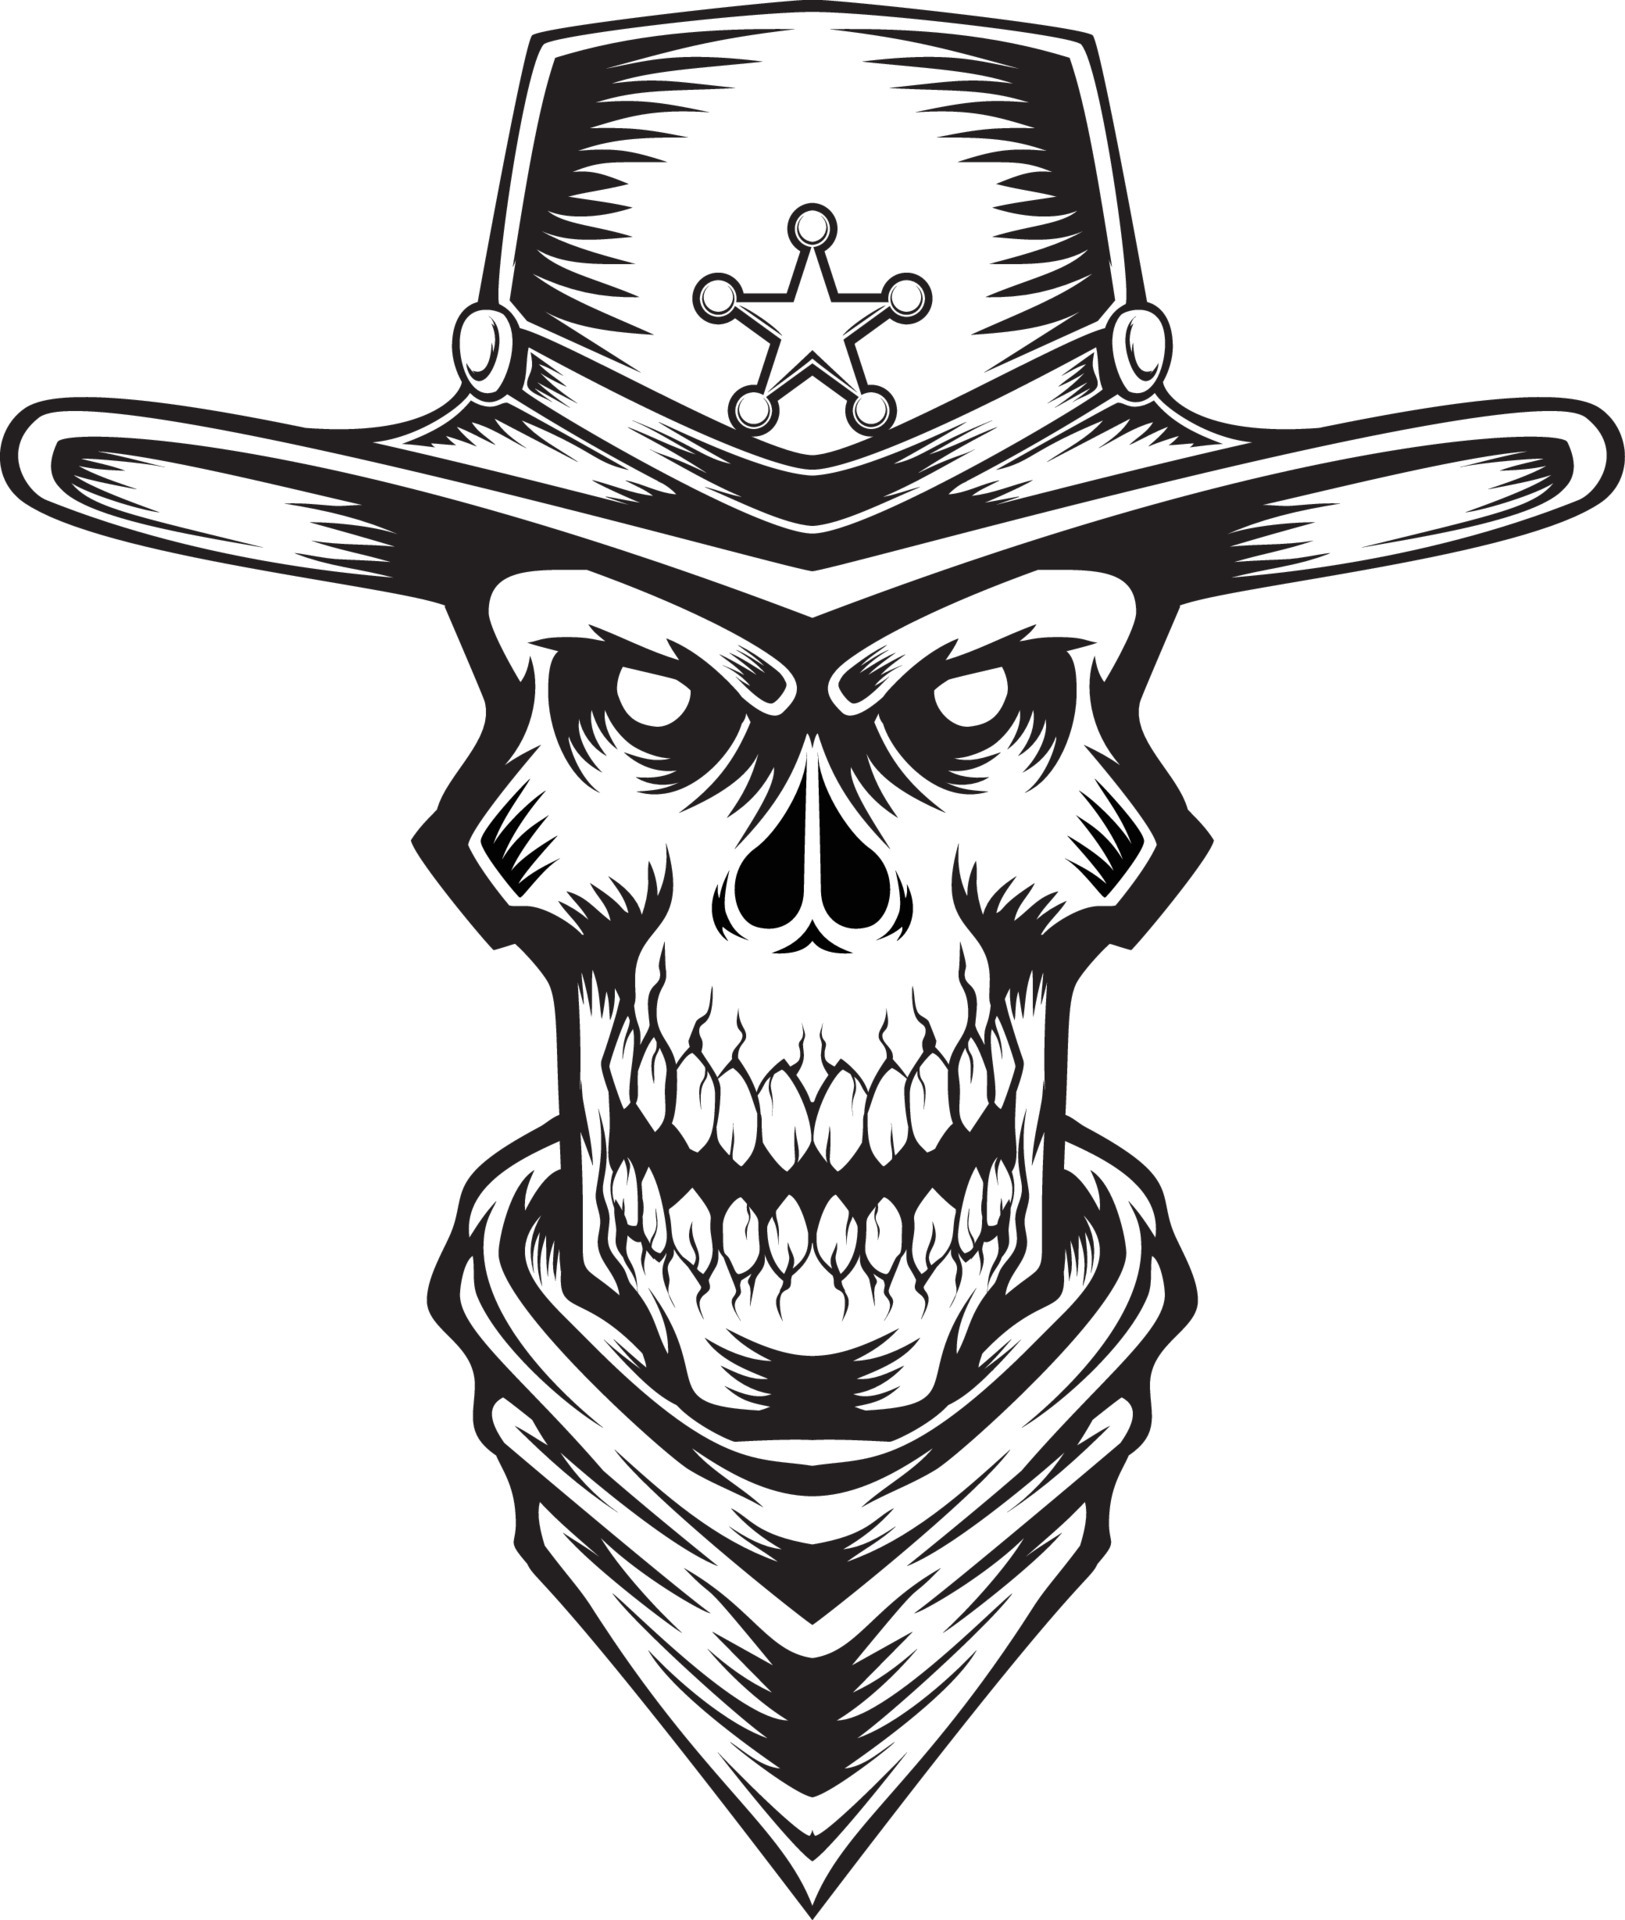 Rate This Cowboy Skull Tattoo 1 to 100  Arm tattoos for guys Skull tattoo  Simplistic tattoos